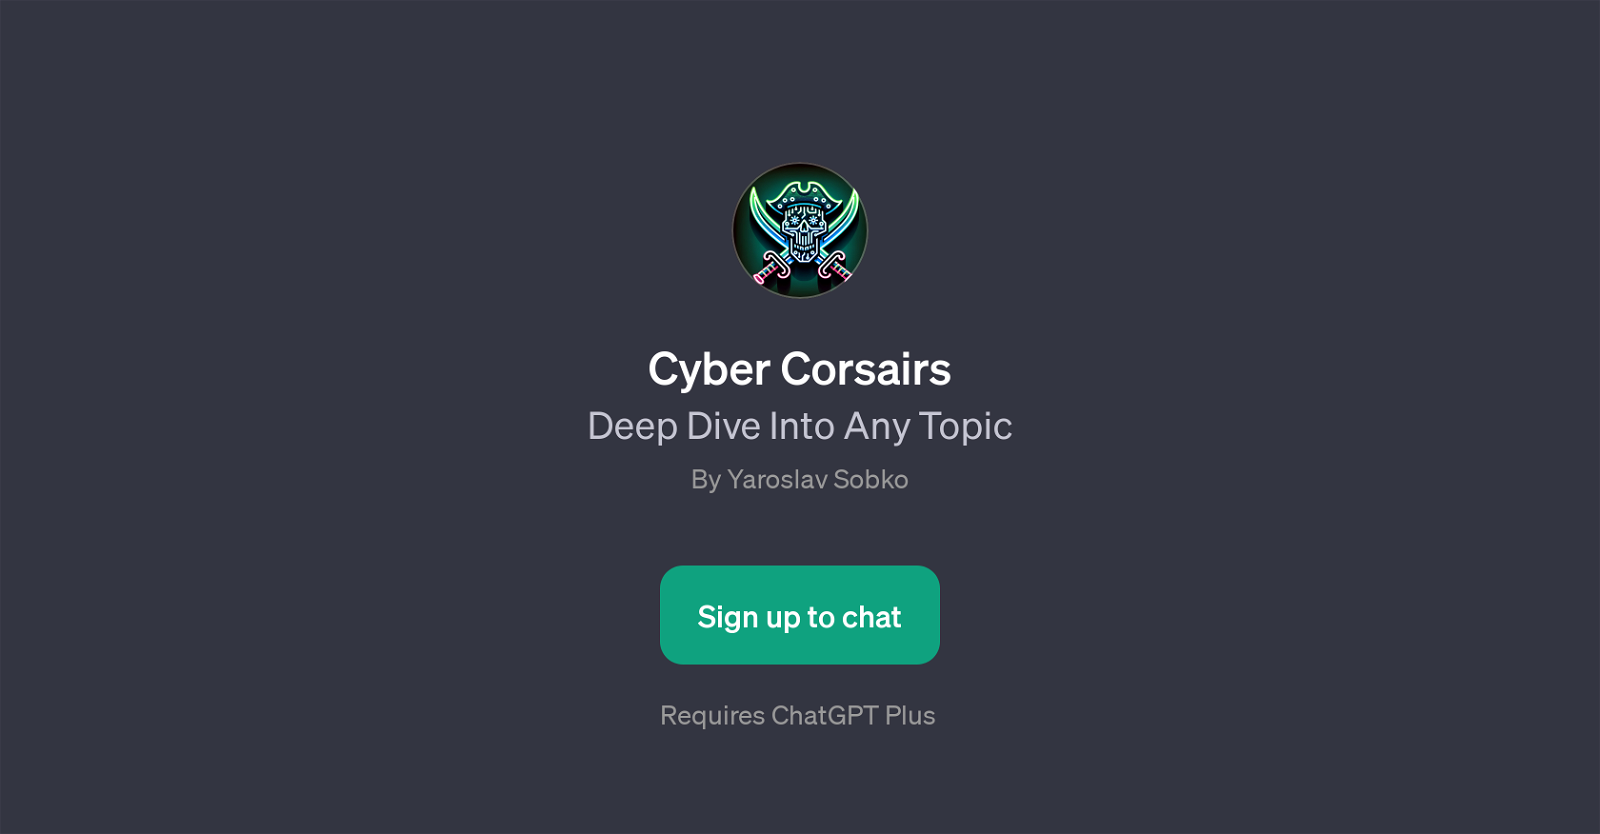 Cyber Corsairs website